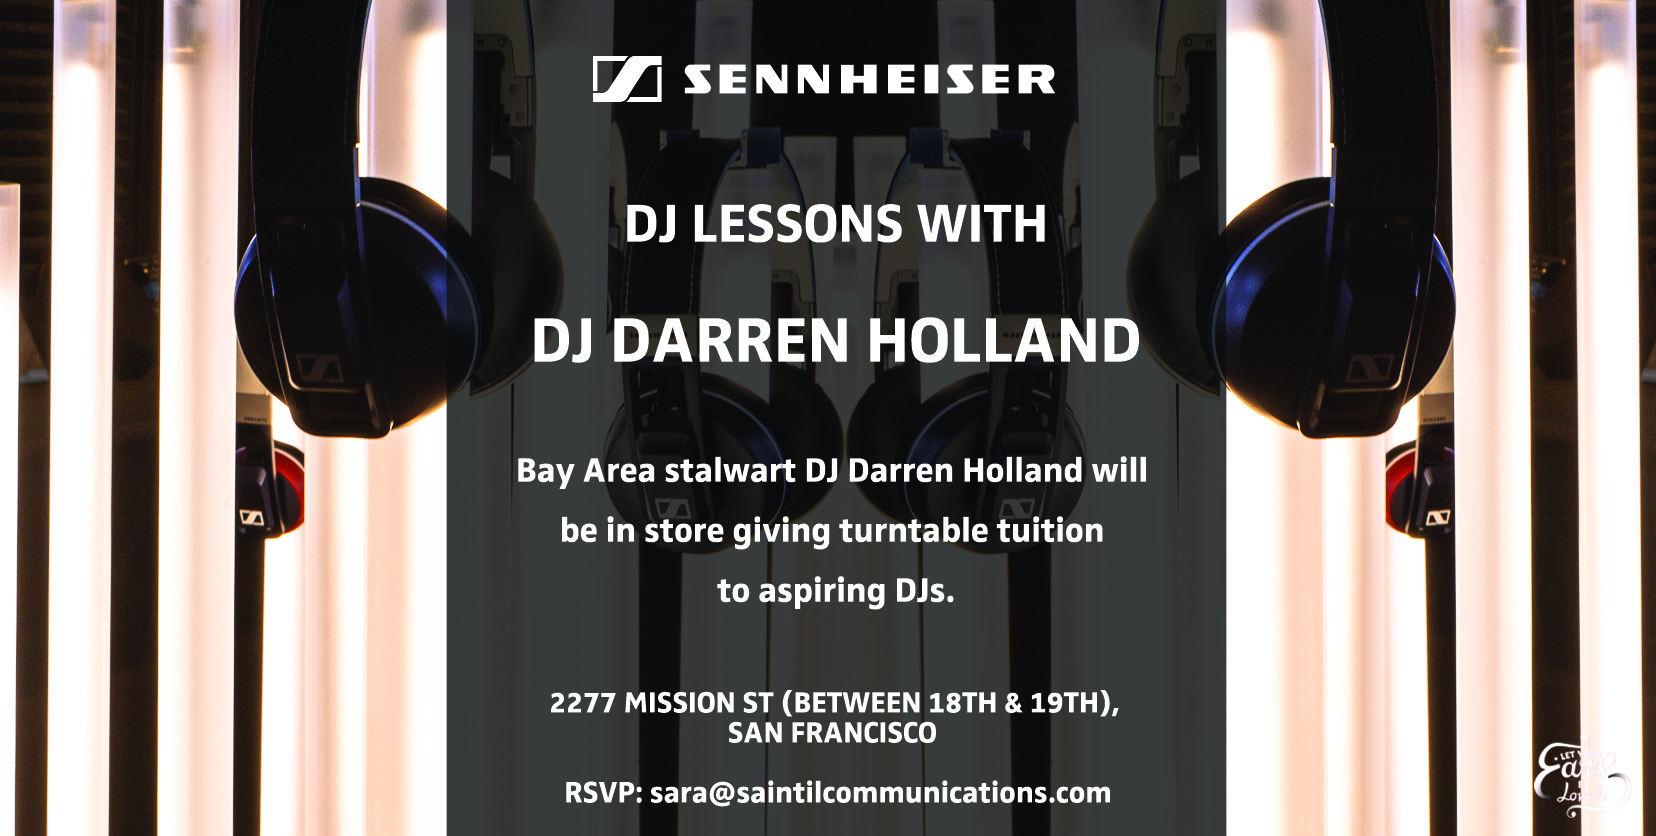 DJ Lessons Flyer - Sennheiser San Francisco Pop Up Store